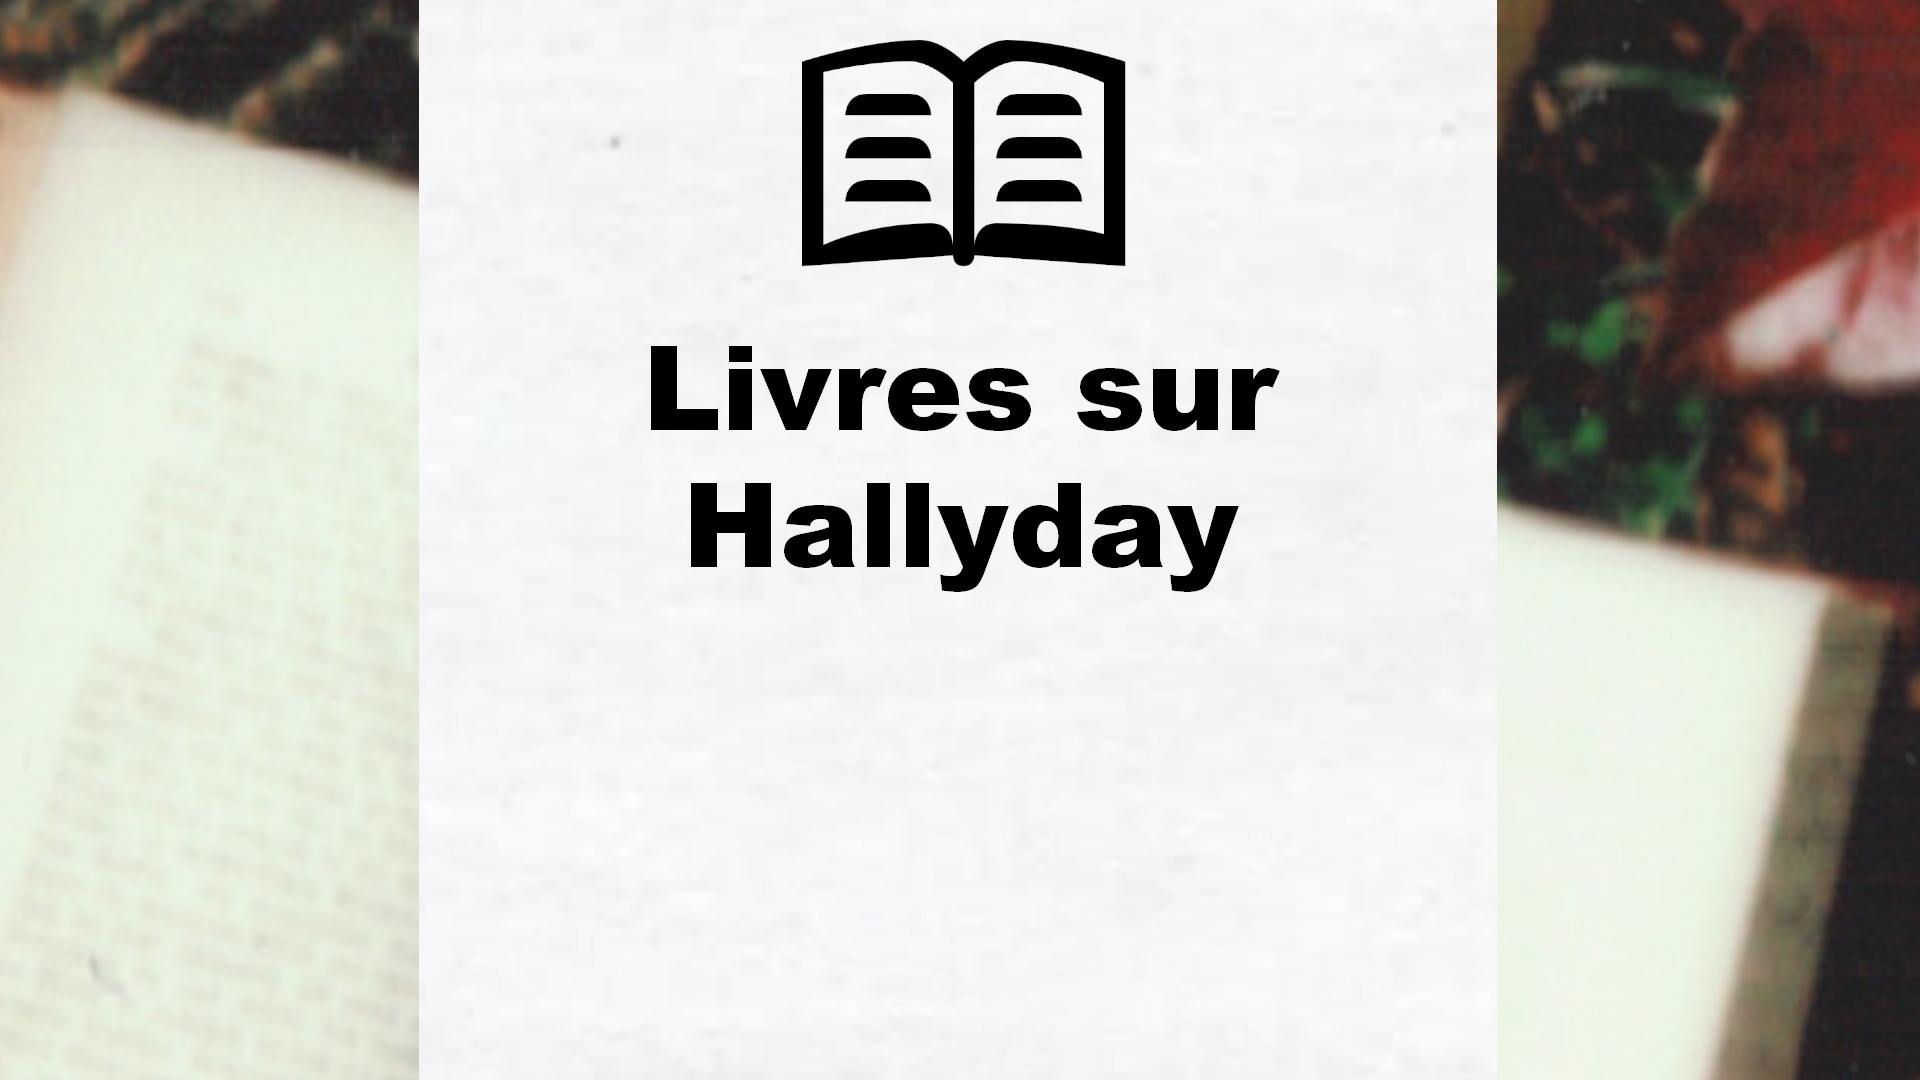 Livres sur Hallyday